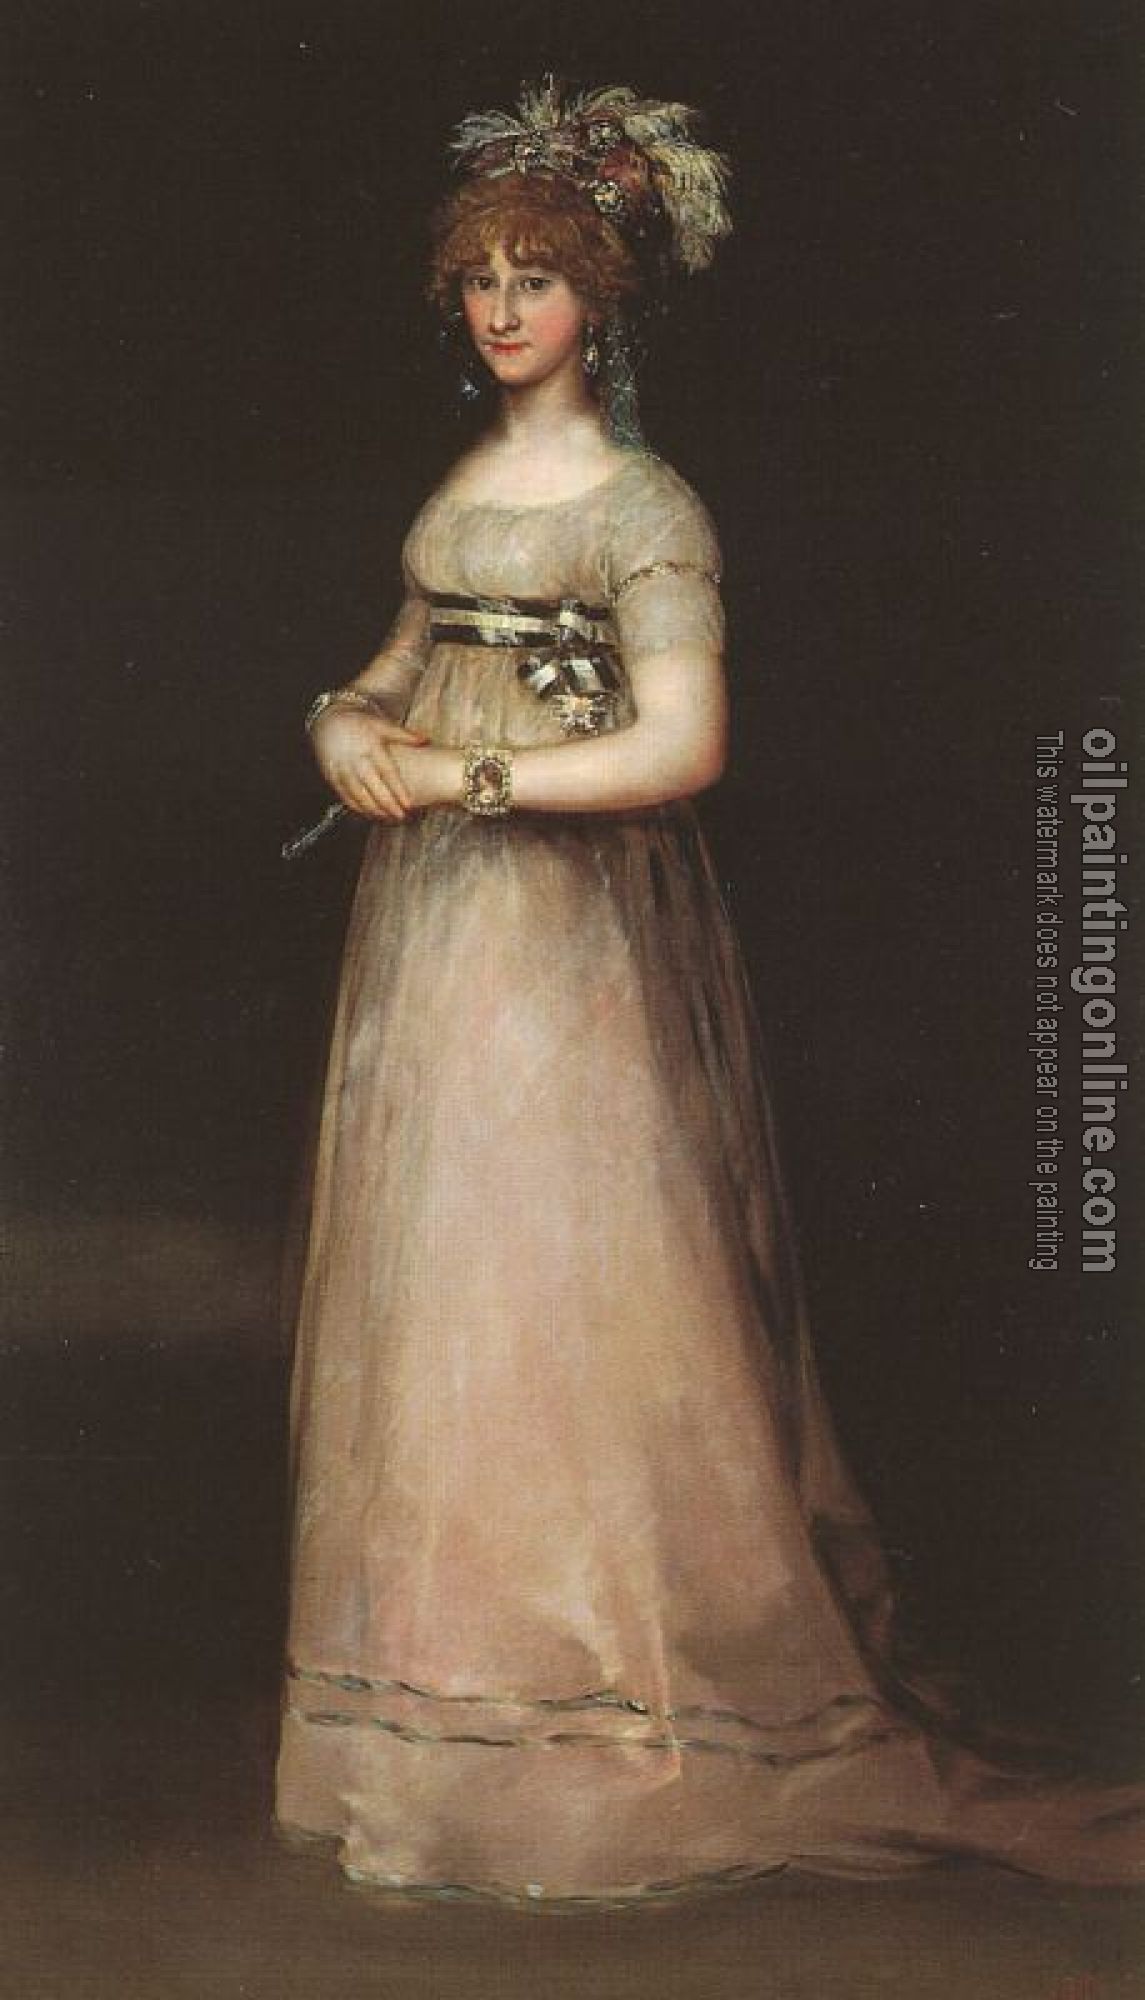 Goya, Francisco de - The Countess of Chinchon